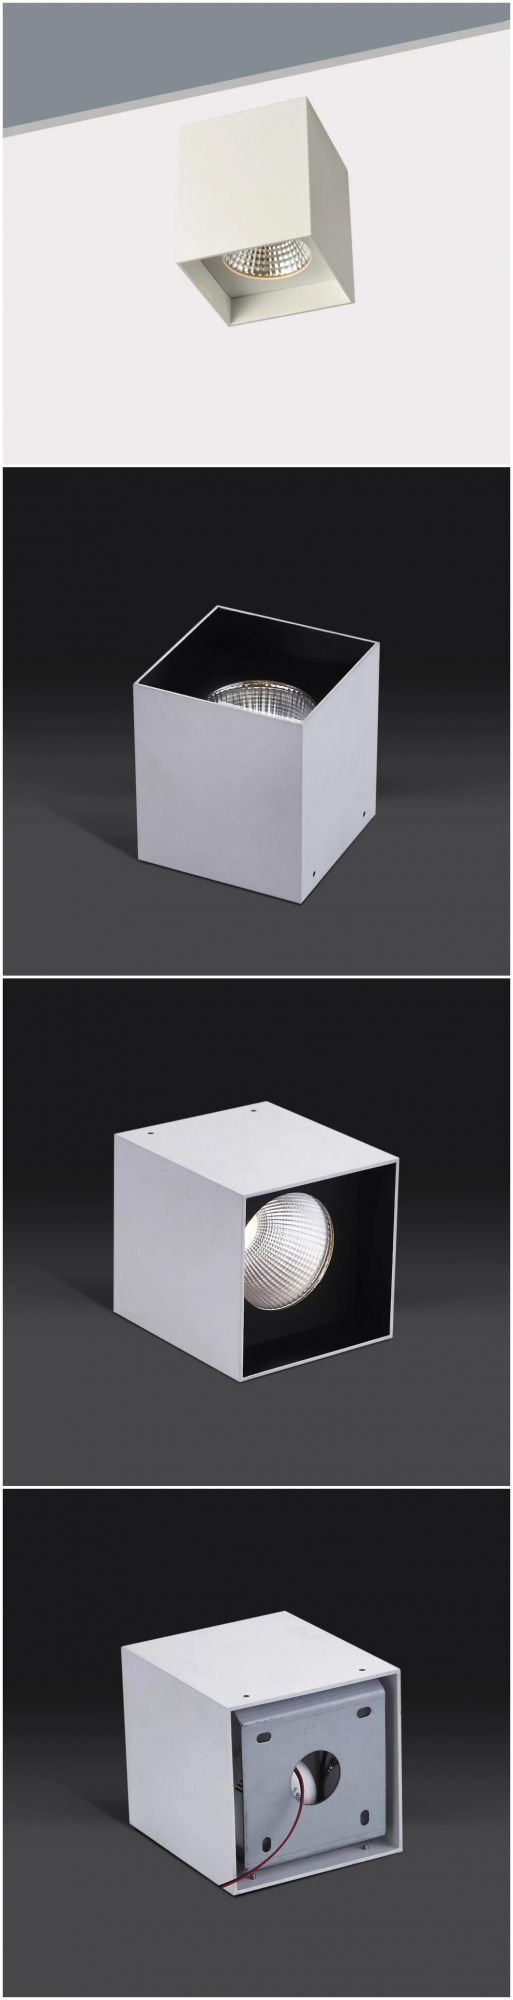 C6024 Hot Selling Square Aluminum LED Ceiling Light